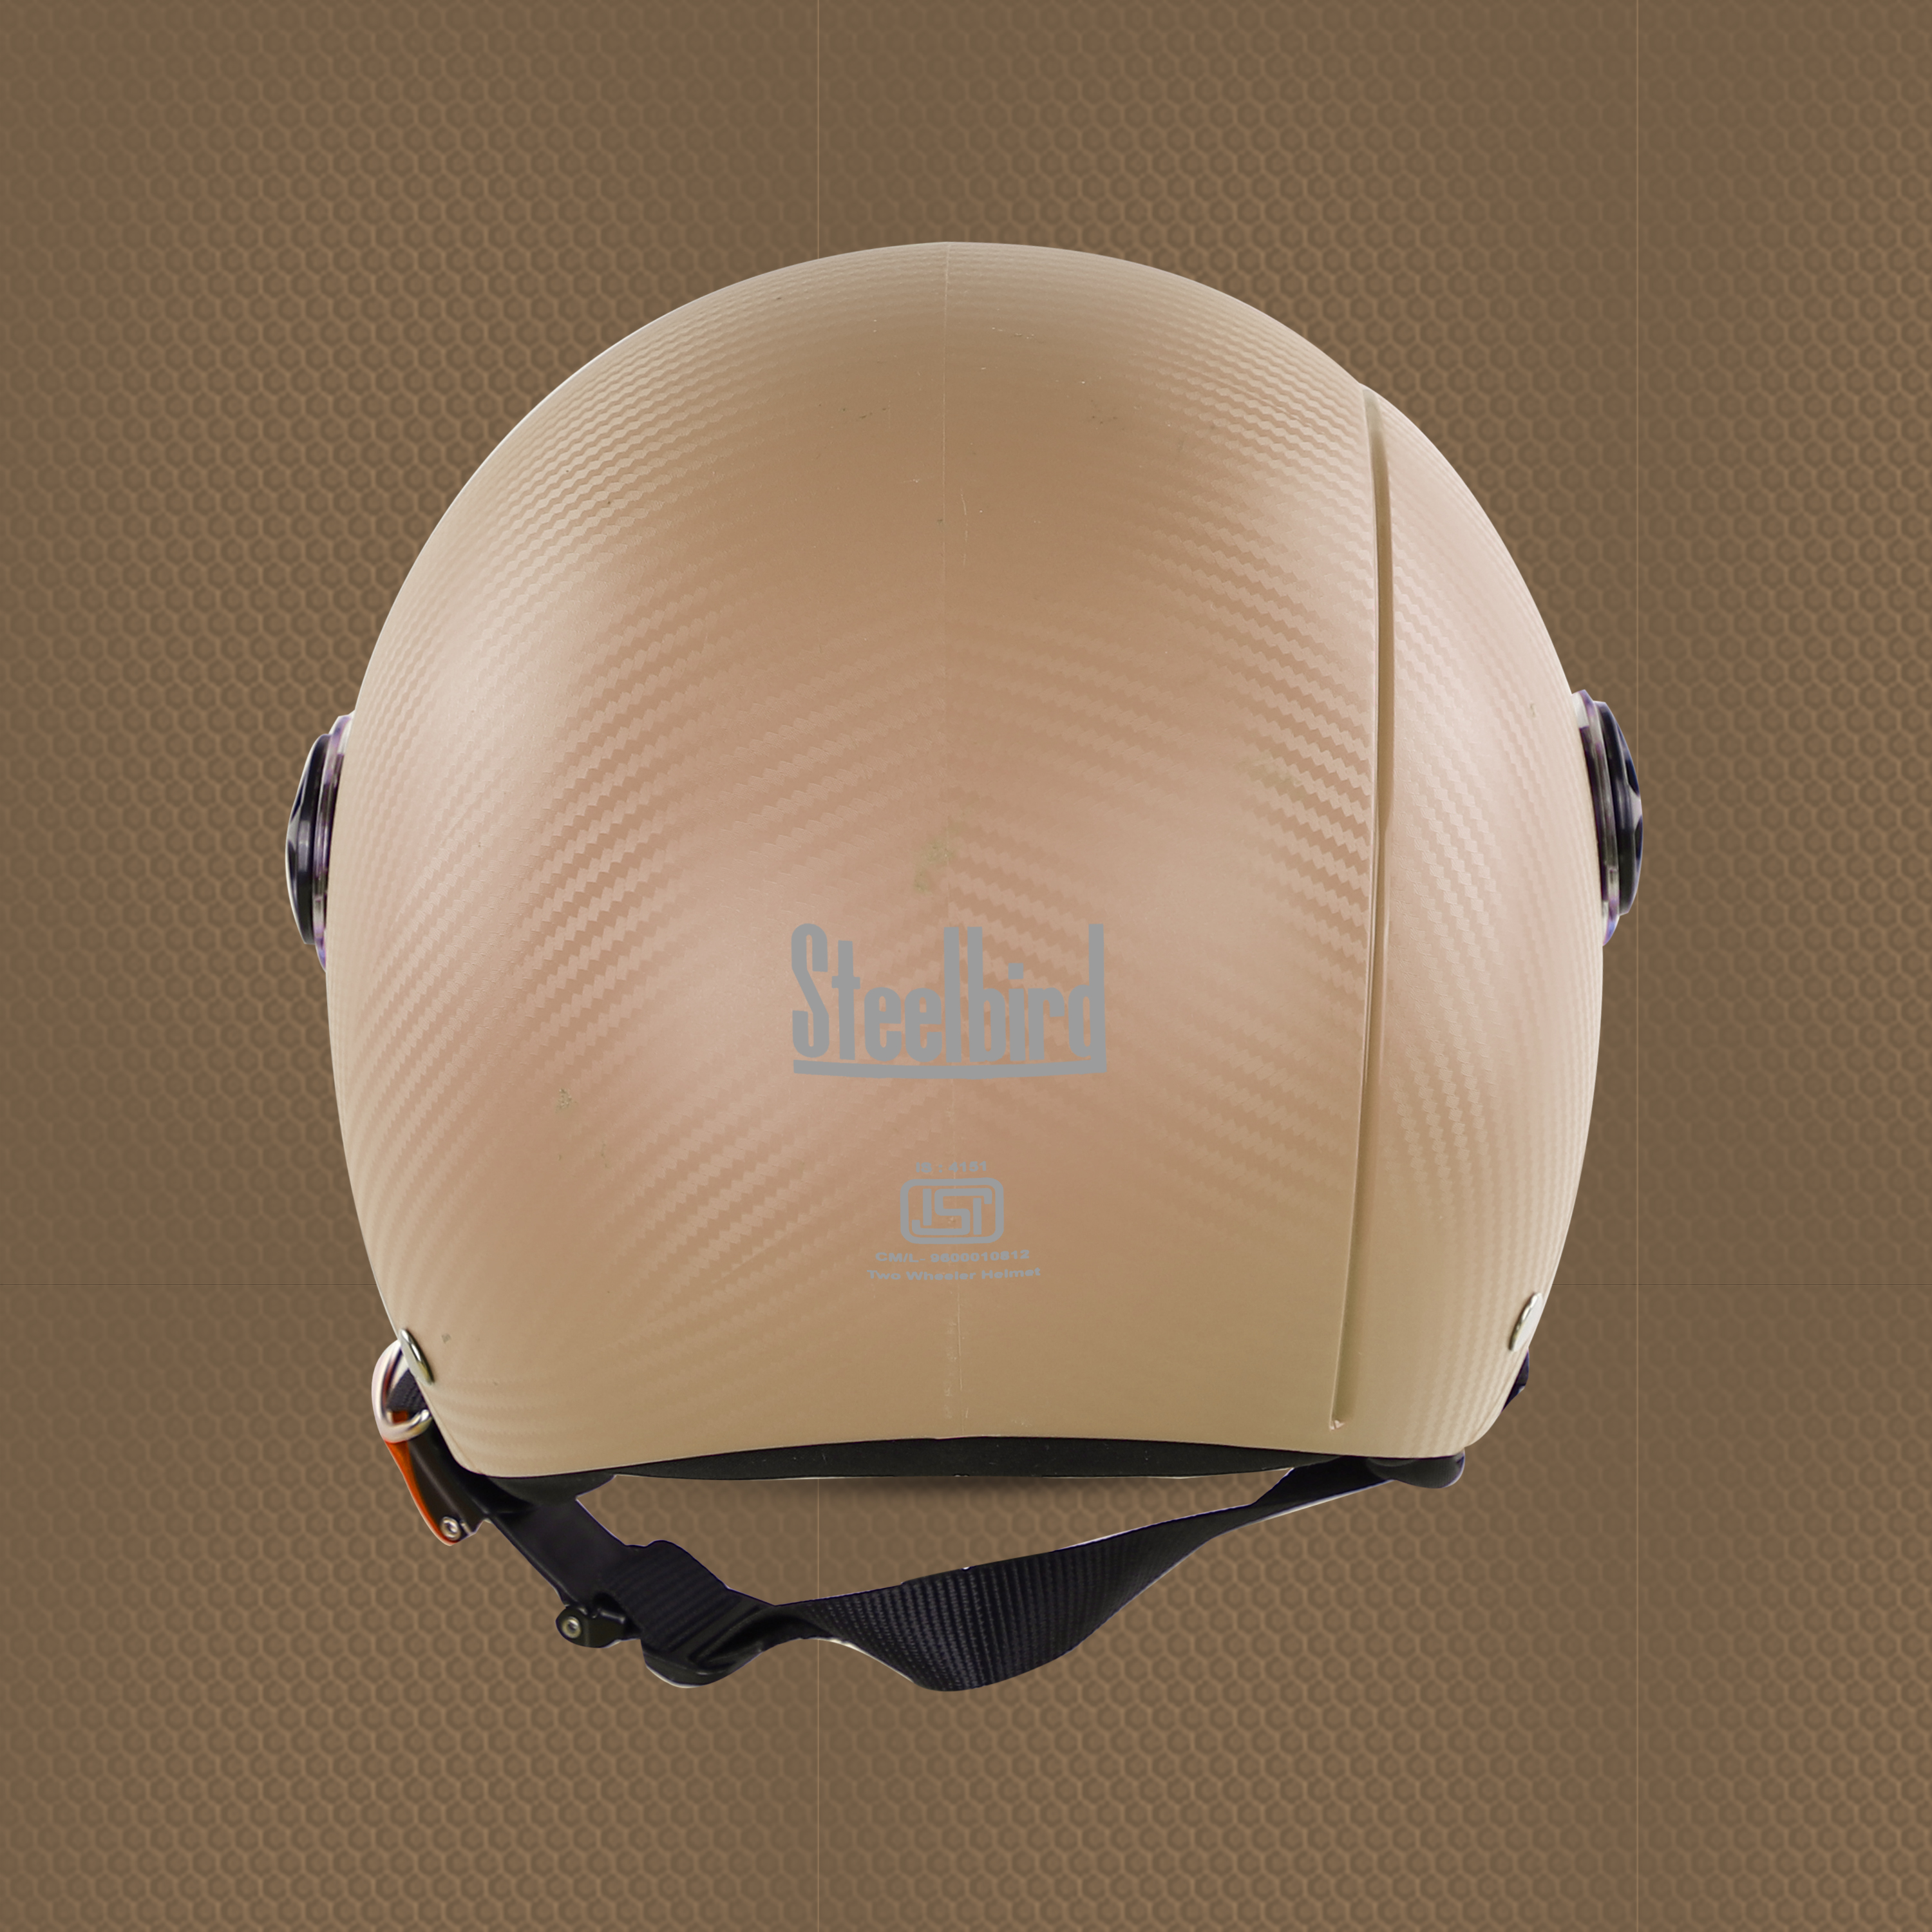 Steelbird SBH-16 Ruby ISI Certified Open Face Helmet (Dashing Desert Storm With Clear Visor)